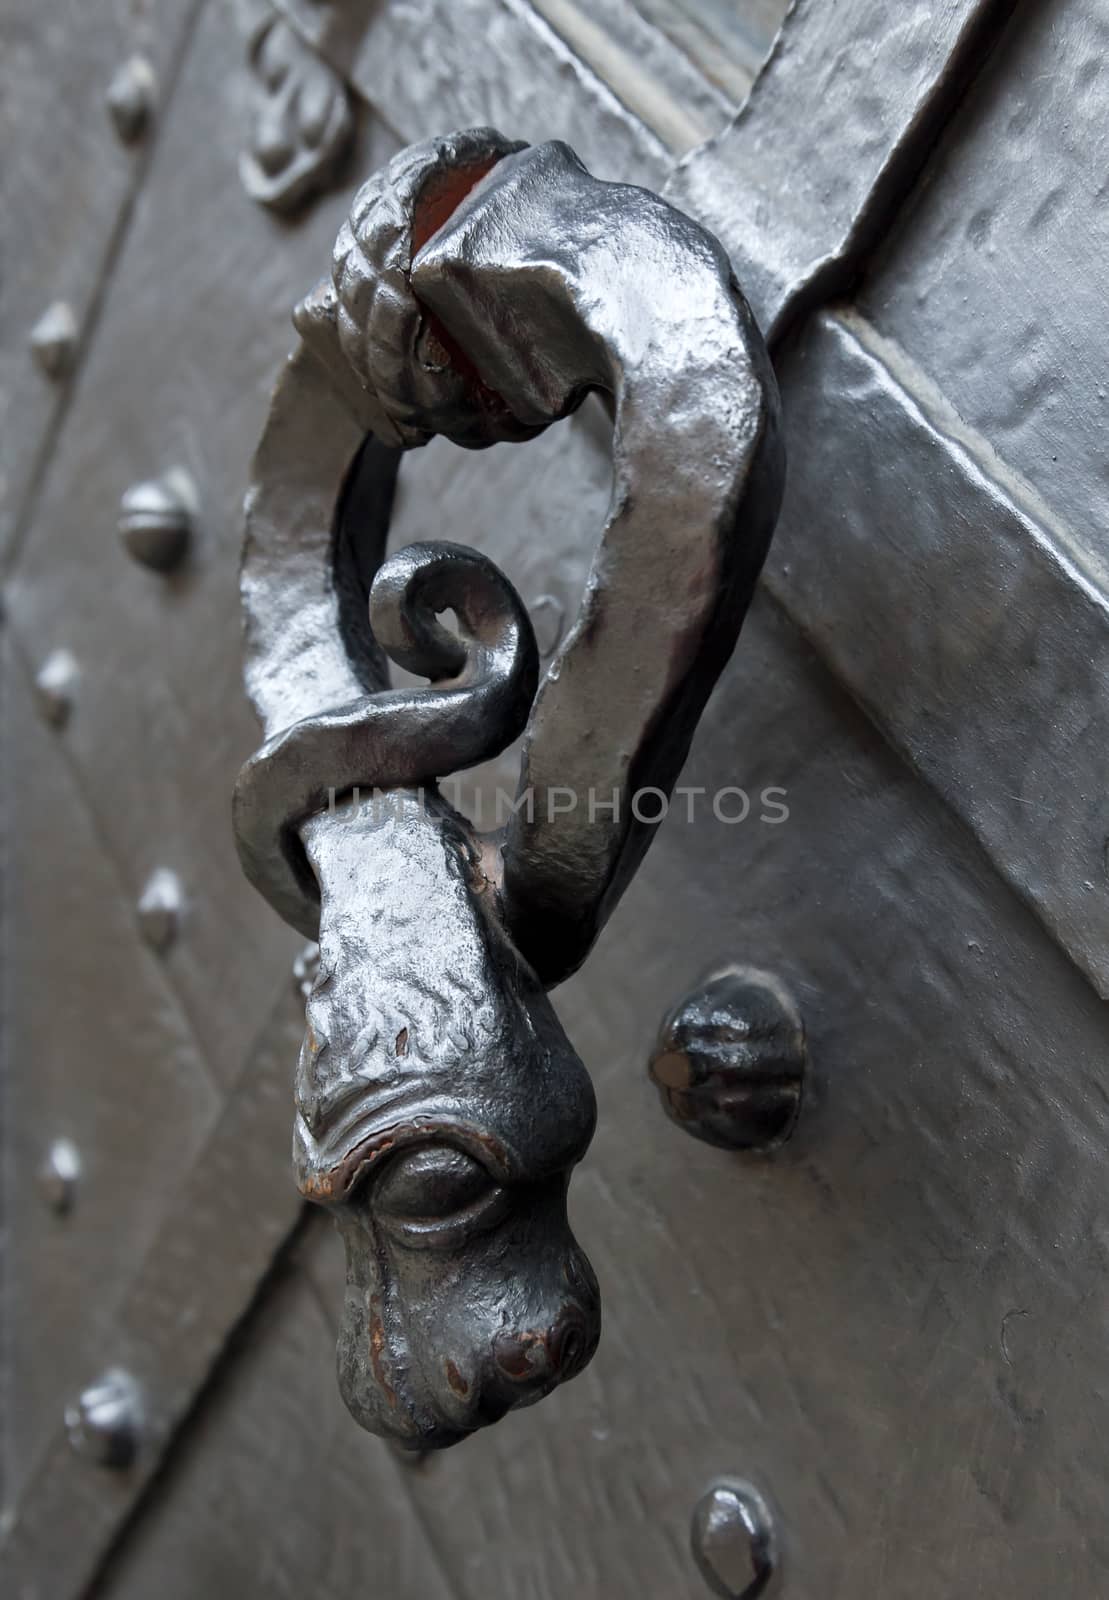 Old door knocker in a shape of a snake, Prague